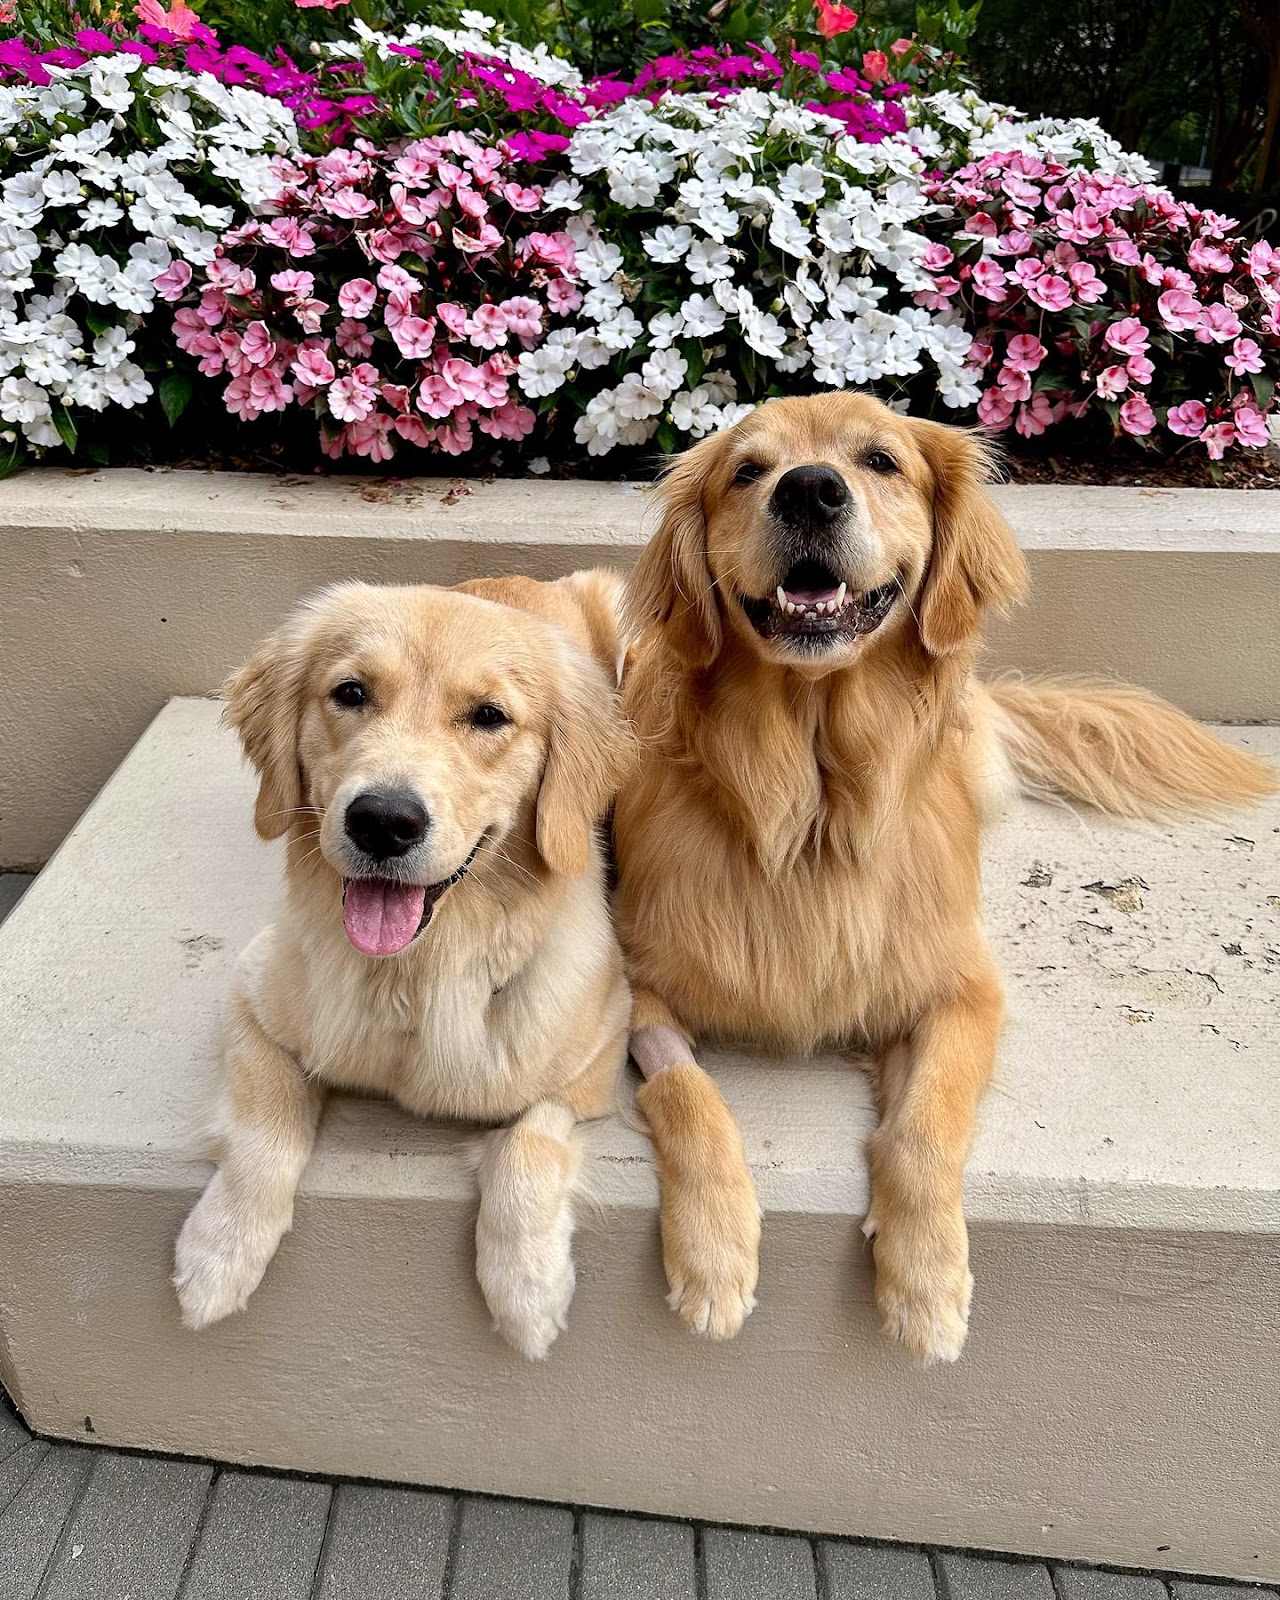 Dog That Has Almost 10 Million Followers On Instagram - Ellie & Emma the Golden Retrievers